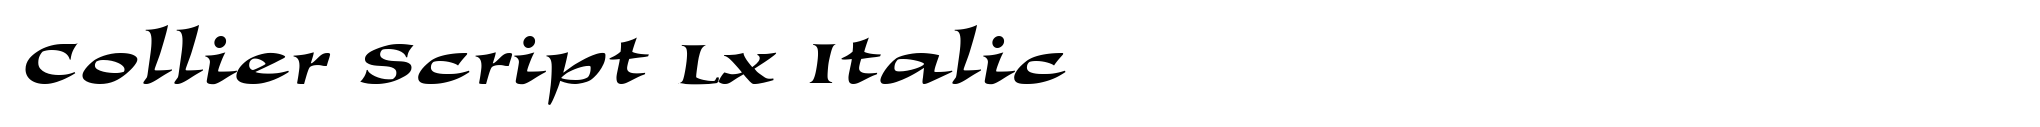 Collier Script Lx Italic image